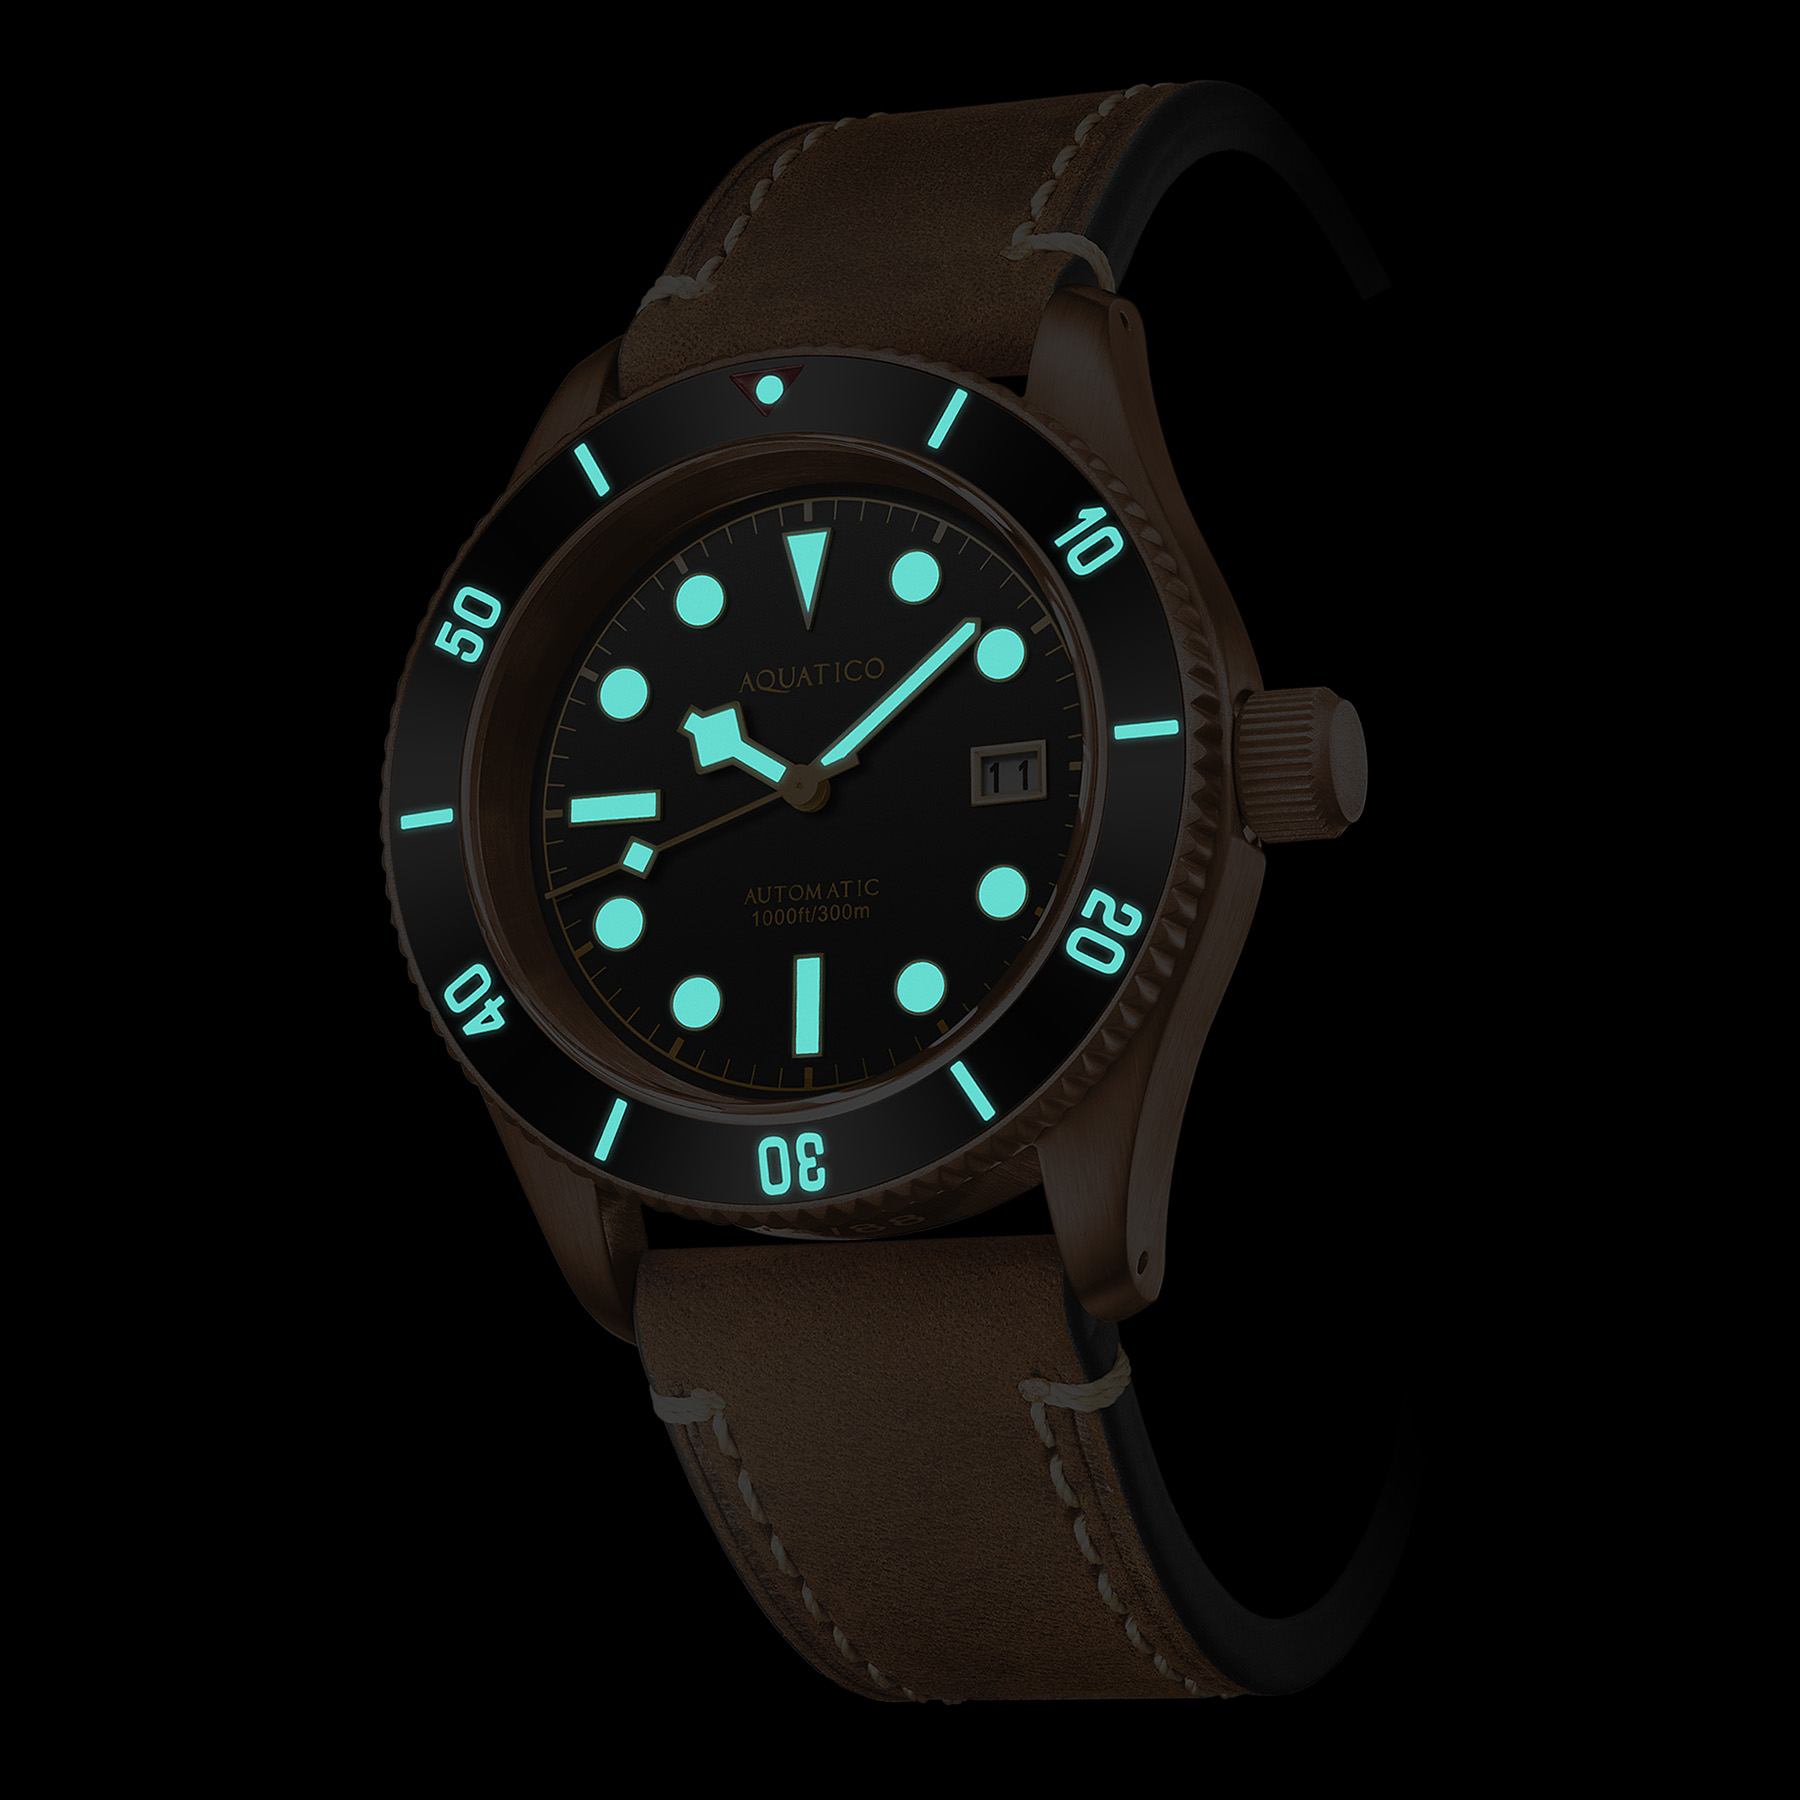 Aquatico Bronze Sea Star Automatic Men's Watch Bronze Case/Blue Dial/Blue Bezel